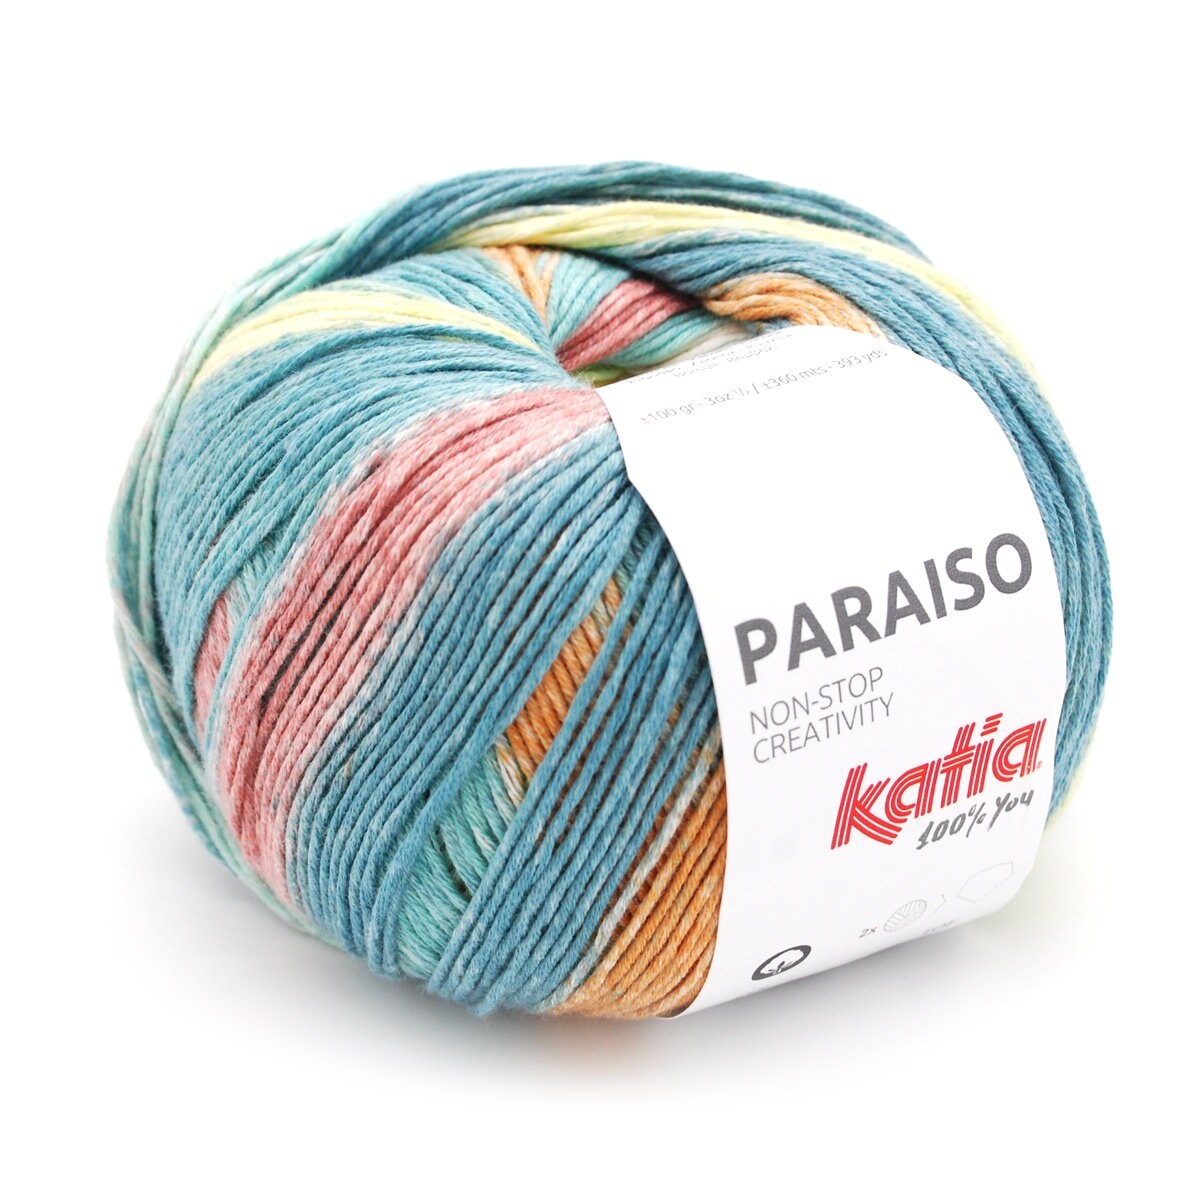 100g PARAISO KATIA 100% Cotton Yarn Gradient Wool | Etsy